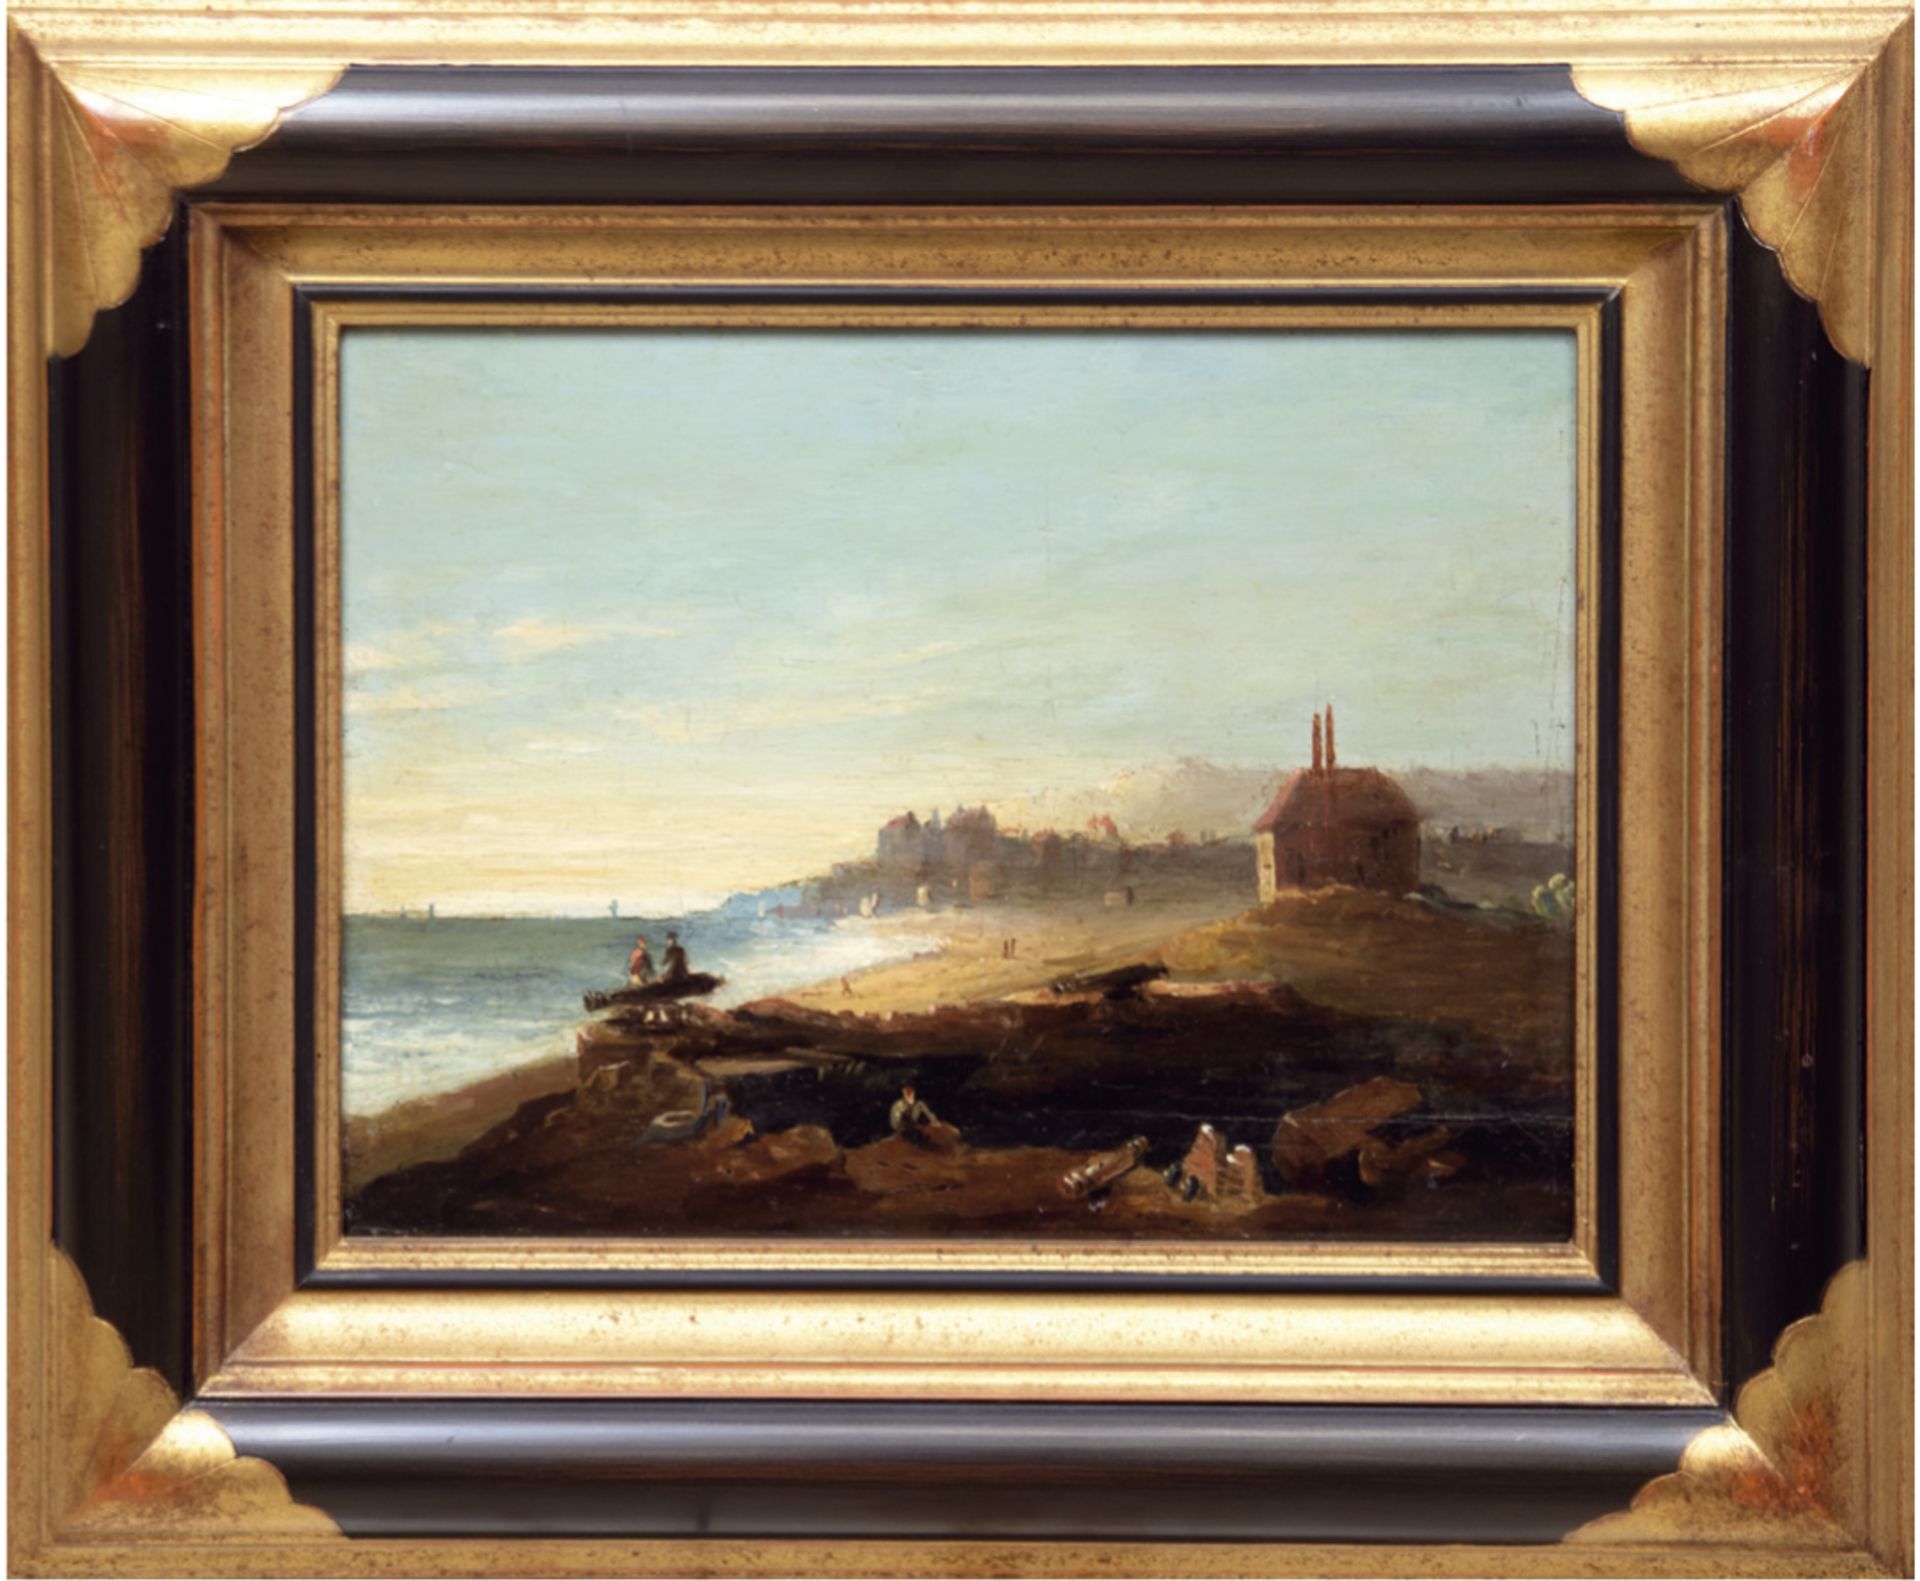 Maler Ende 19. Jh. "Küstenlandschaft", Öl/Holz, unsigniert, 21x27,5 cm, Rahmen